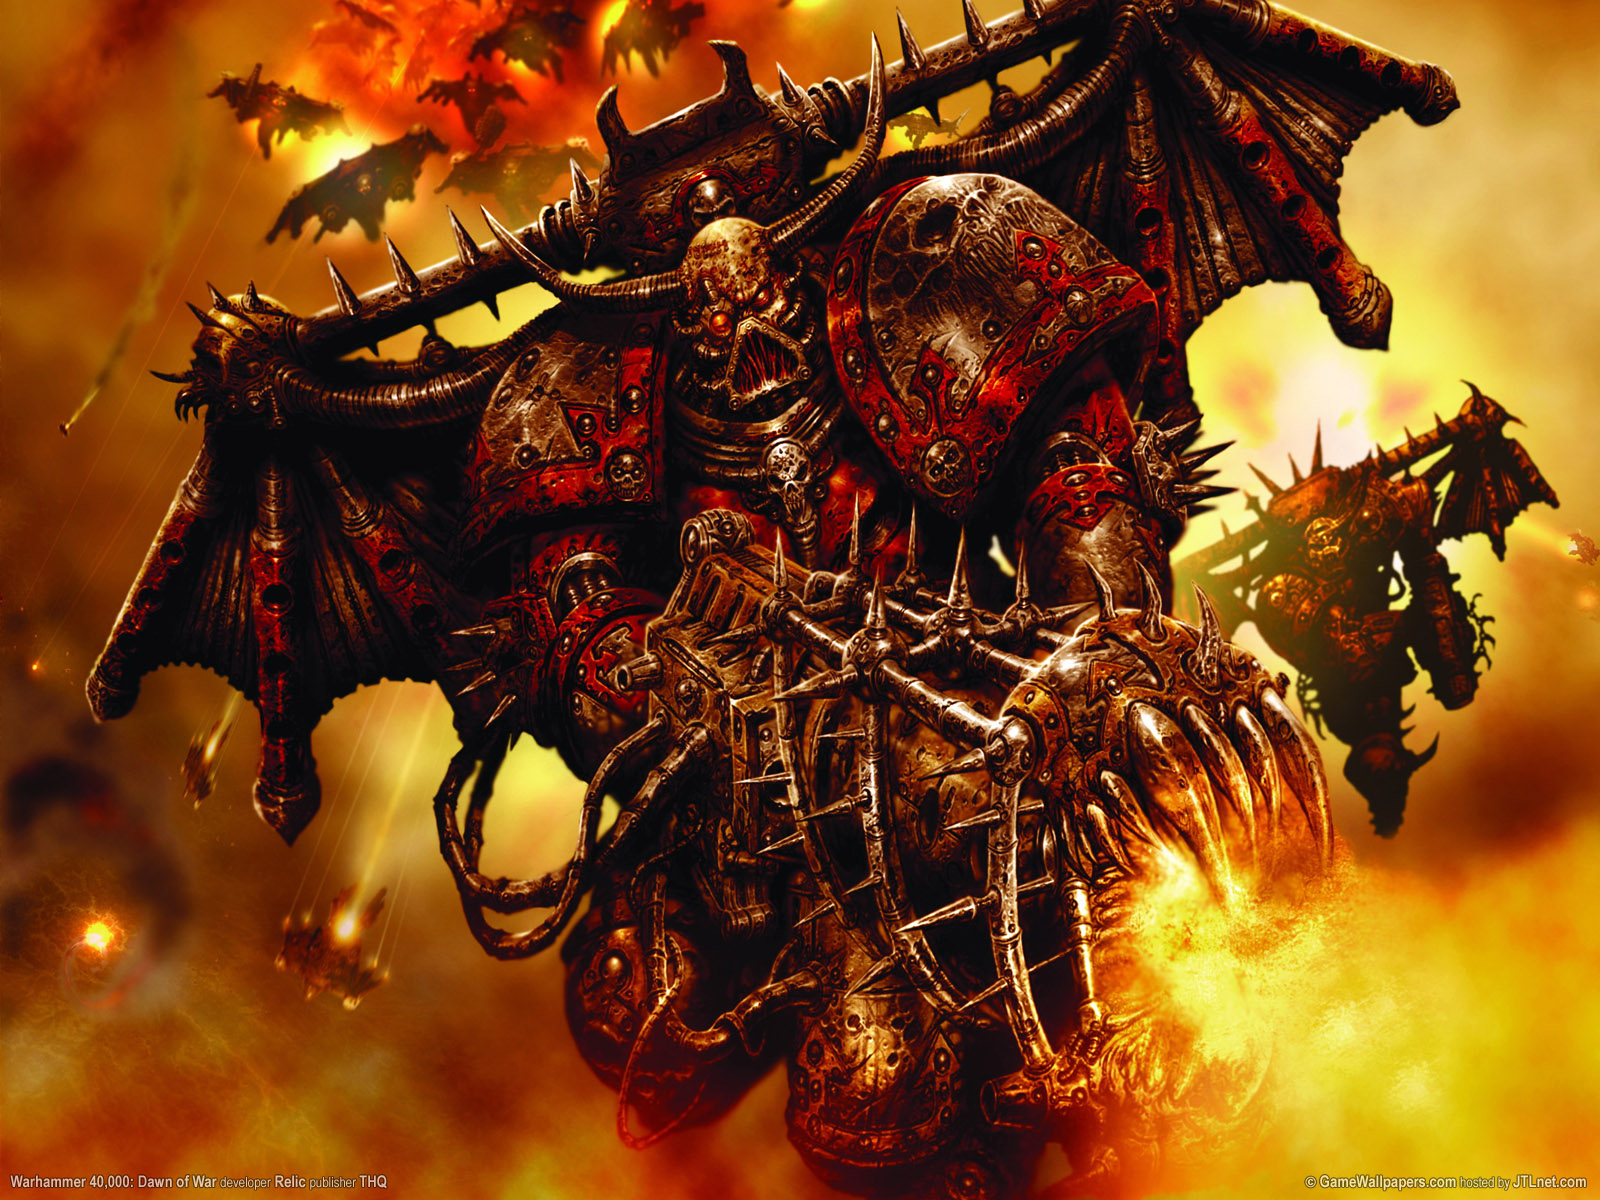 Chaos image - Warhammer 40K Fan Group.